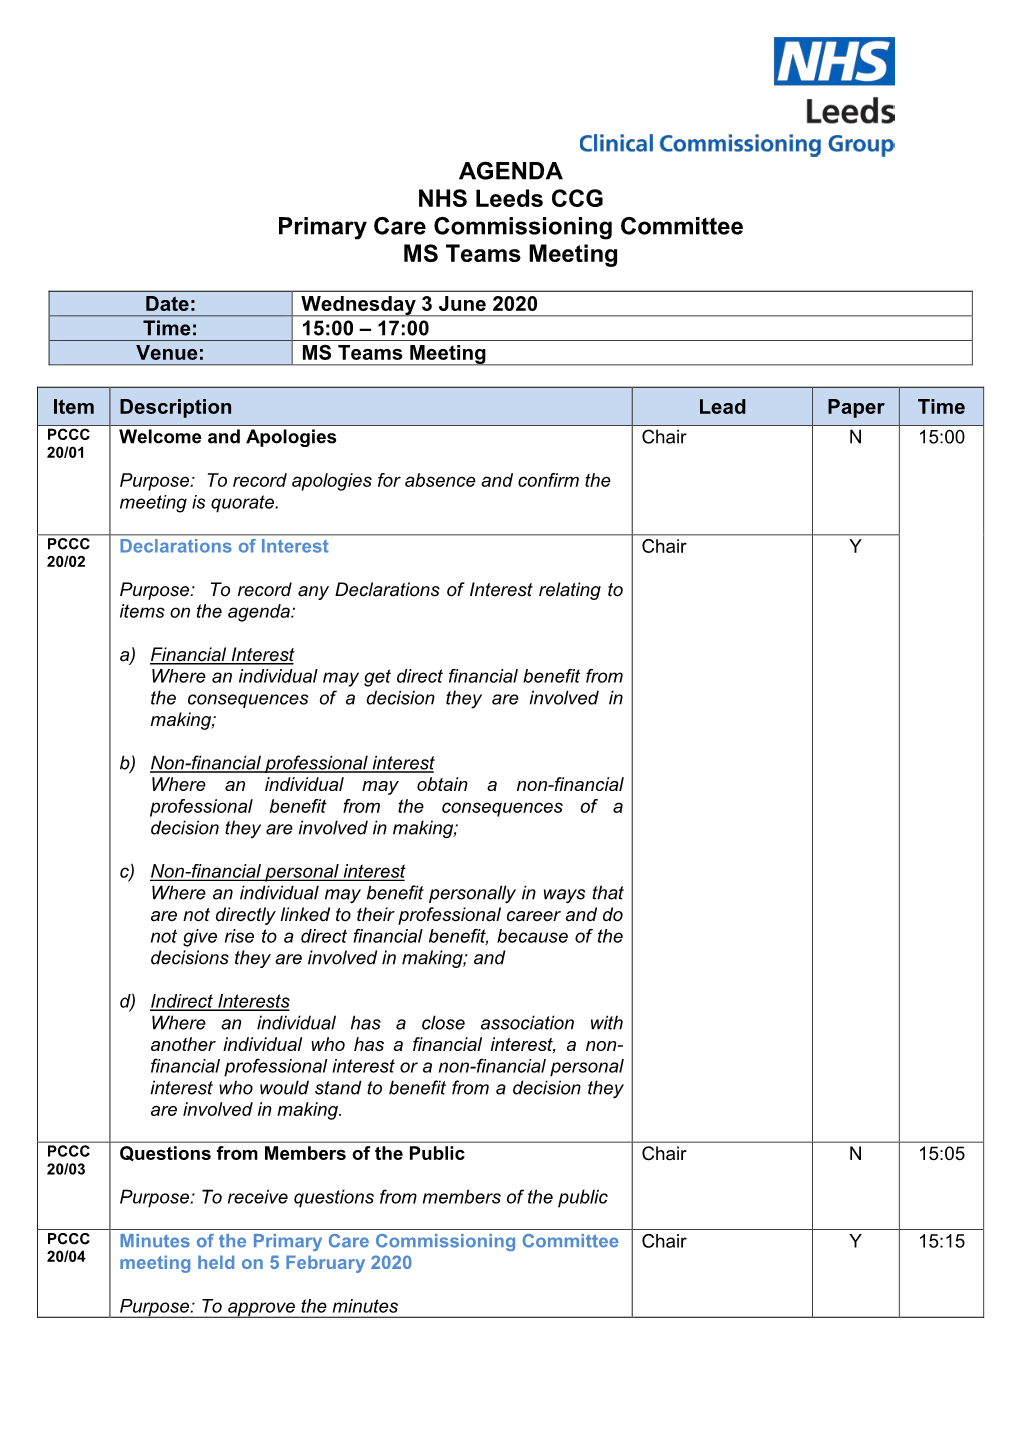 AGENDA NHS Leeds CCG Primary Care Commissioning Committee MS Teams Meeting